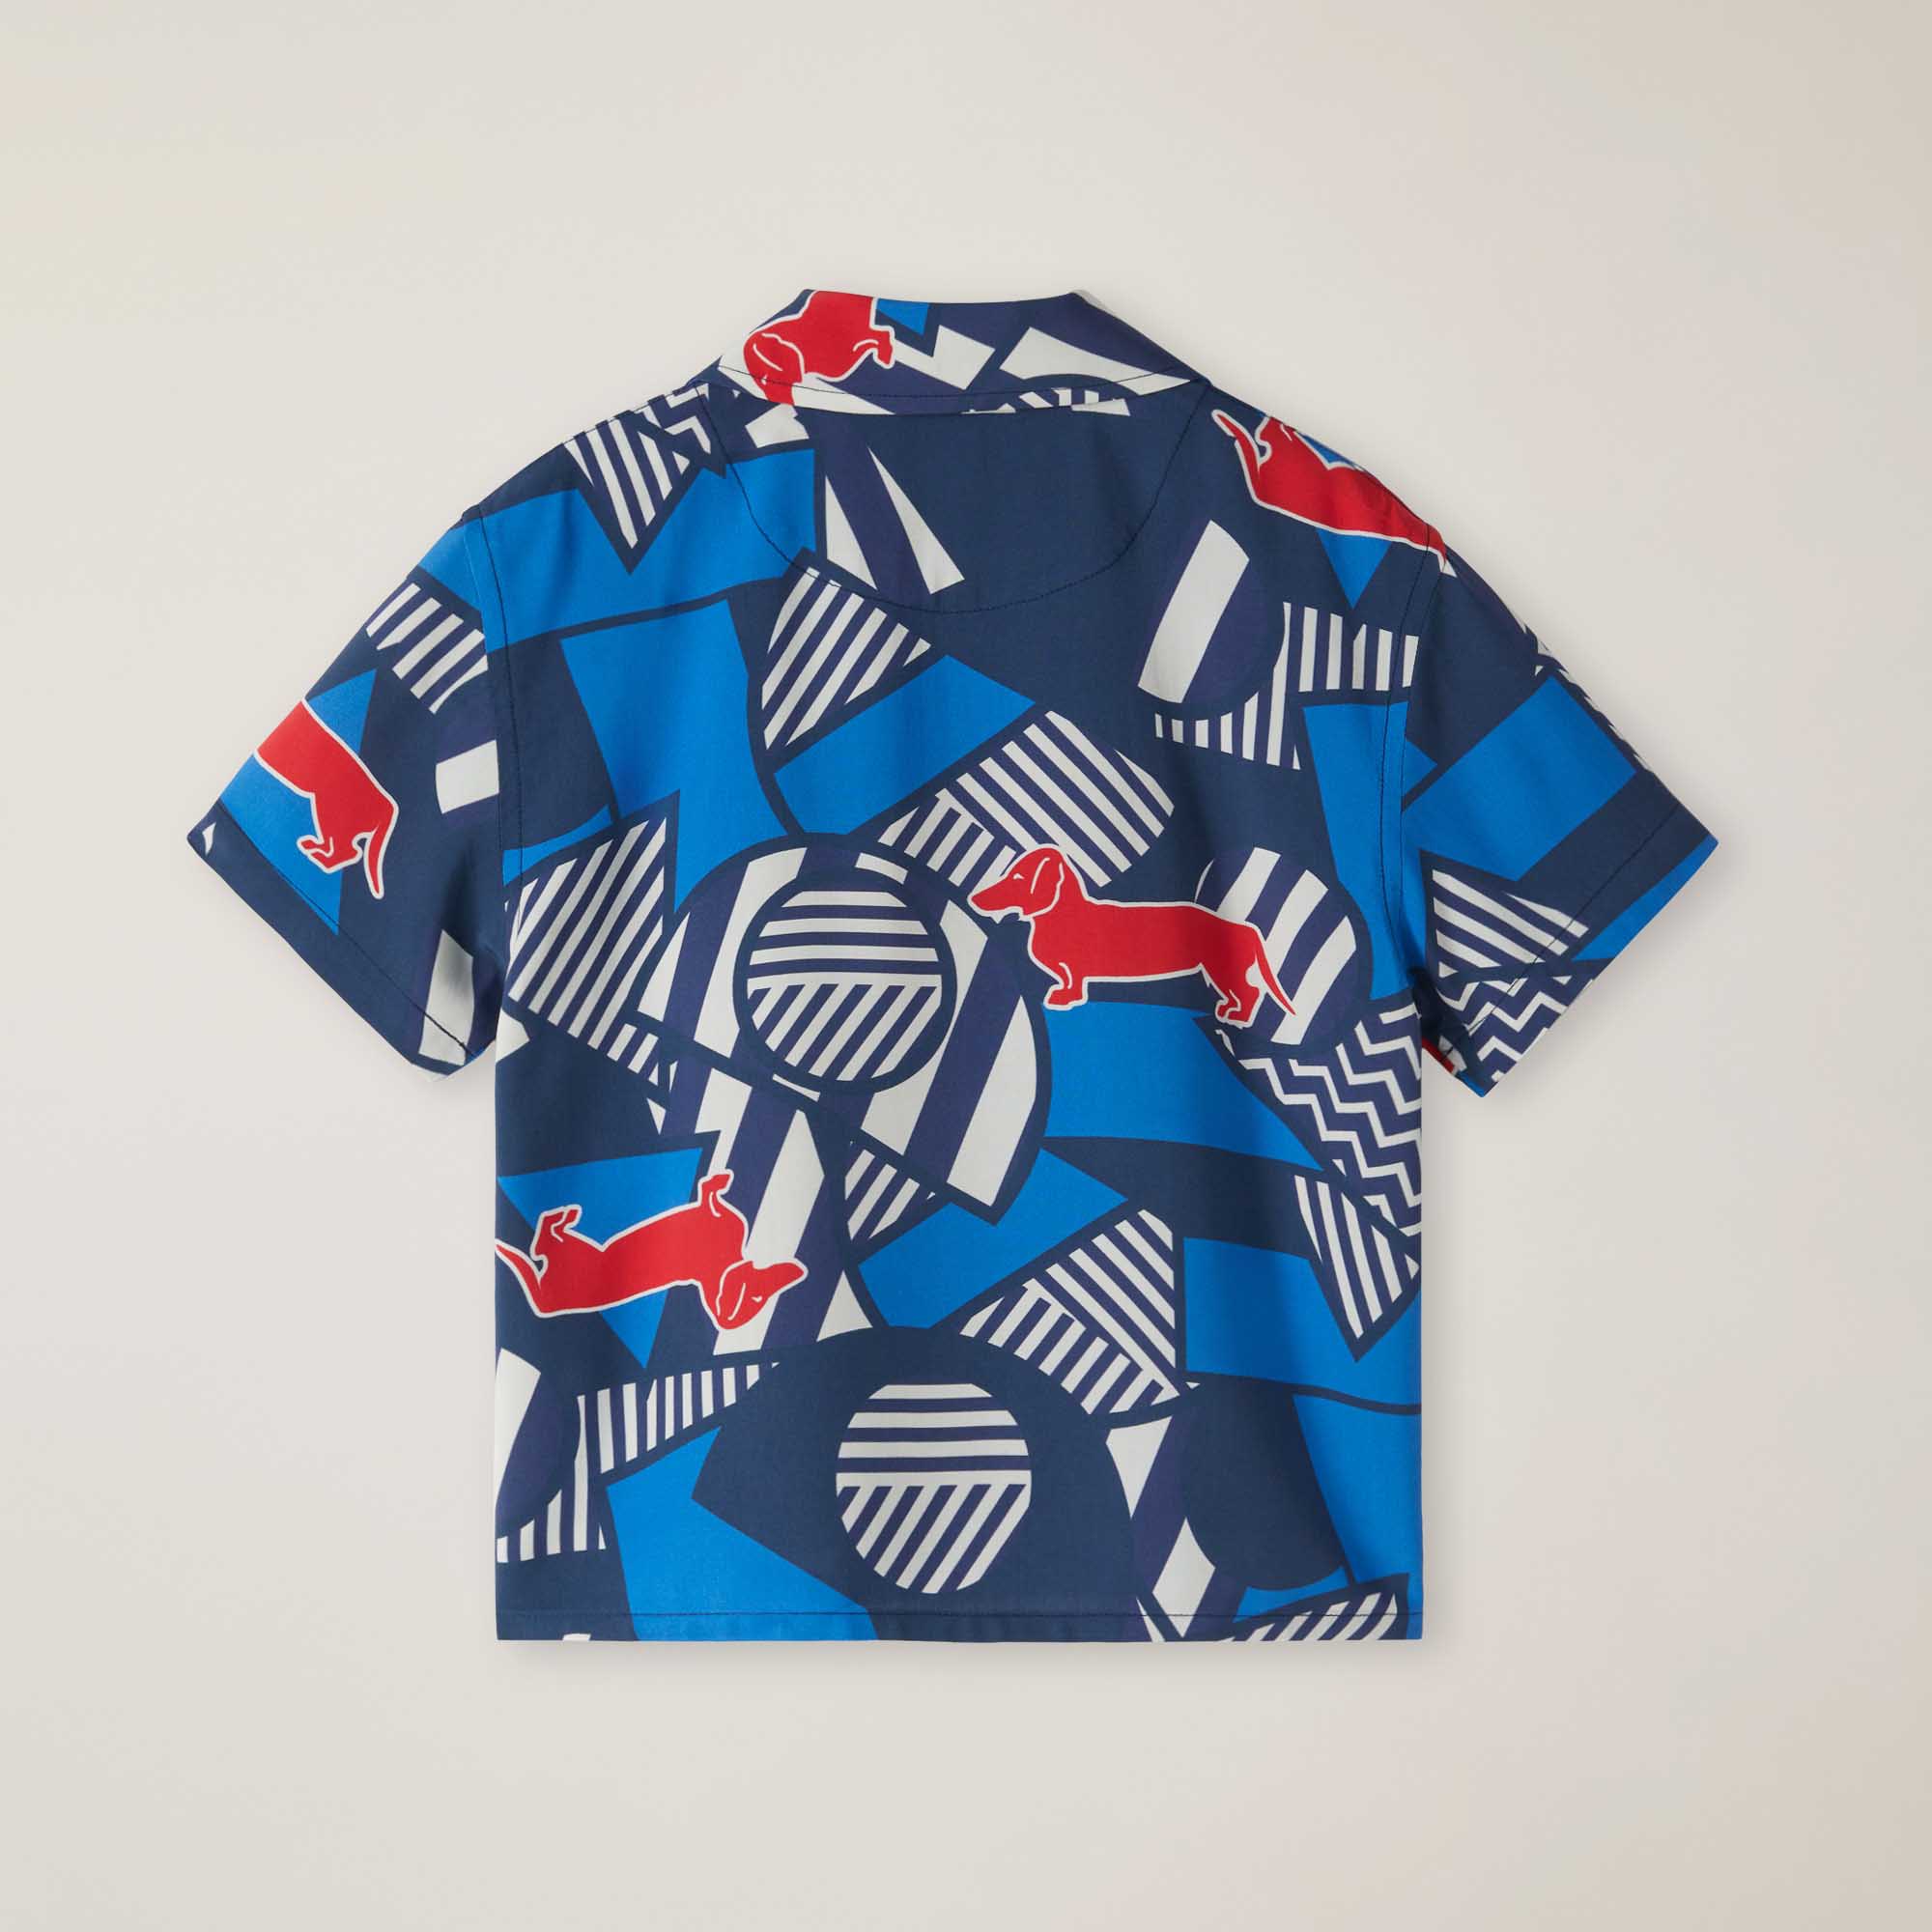 Bowling shirt with geometric print